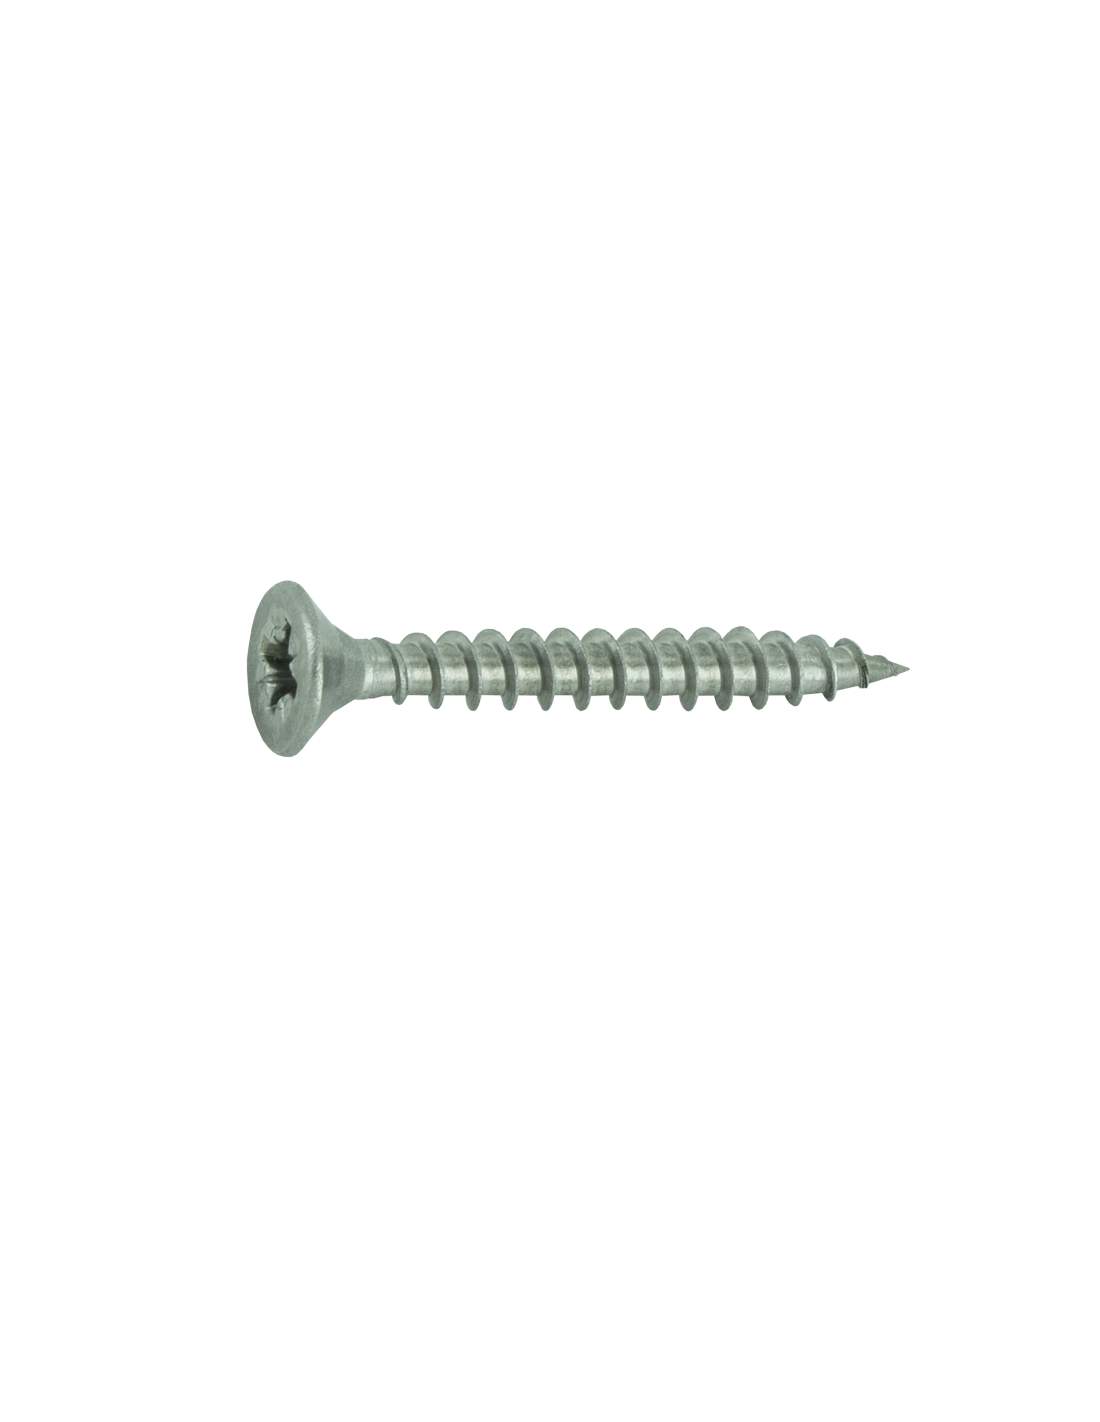 Pozidriv countersunk stainless steel screws A2 4x40, 21 pcs.